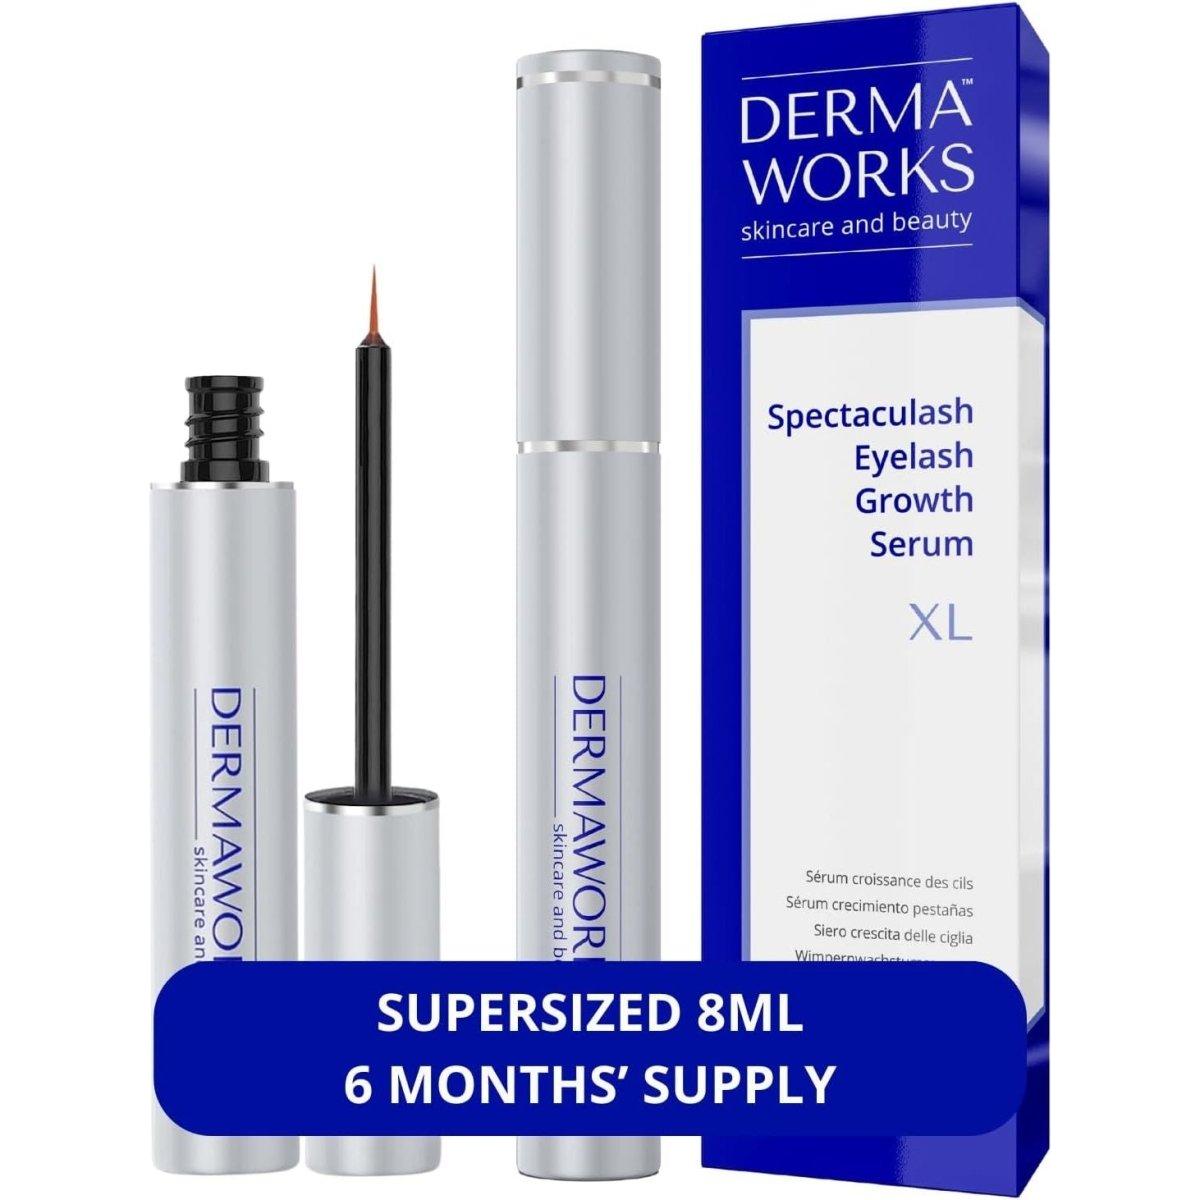 Dermaworks Supersize Spectaculash Advanced Eyelash Growth Serum - 8ml - DG International Ventures Limited